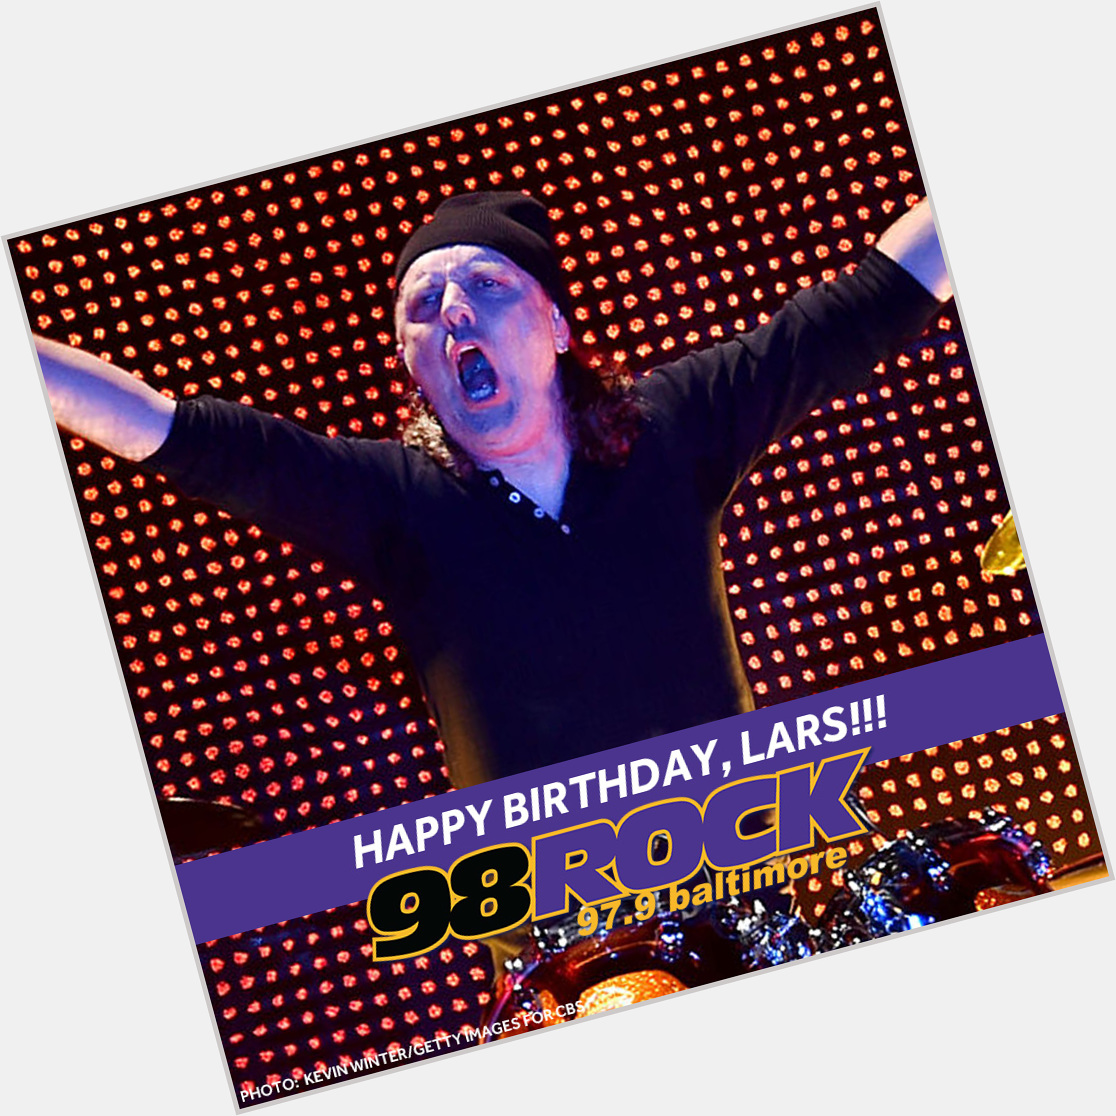 Happy 59th birthday to drummer Lars Ulrich! 